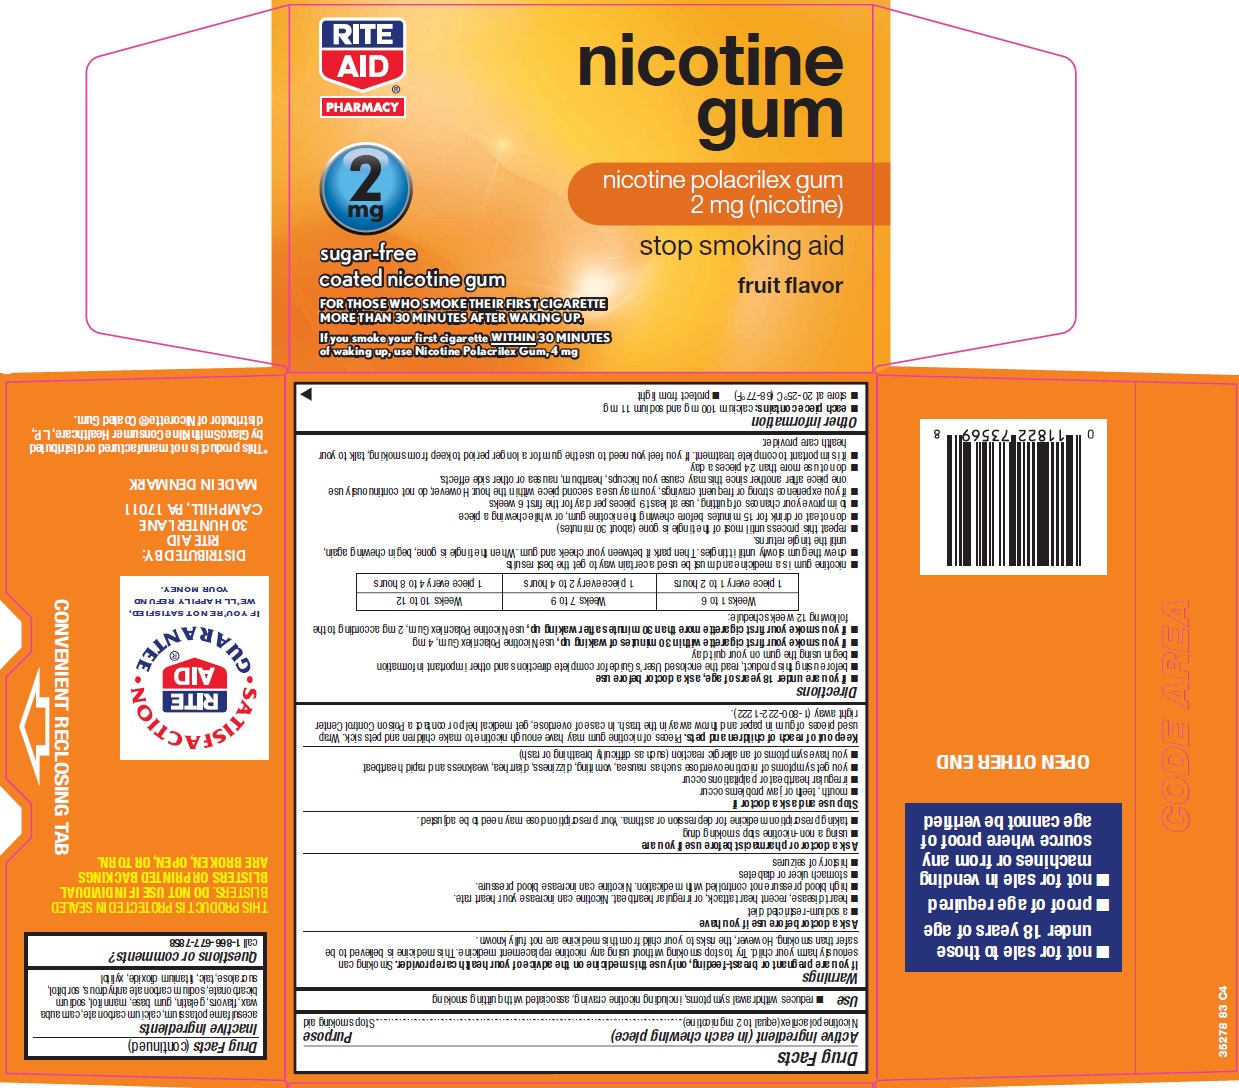 352-83-nicotine gum-2.jpg